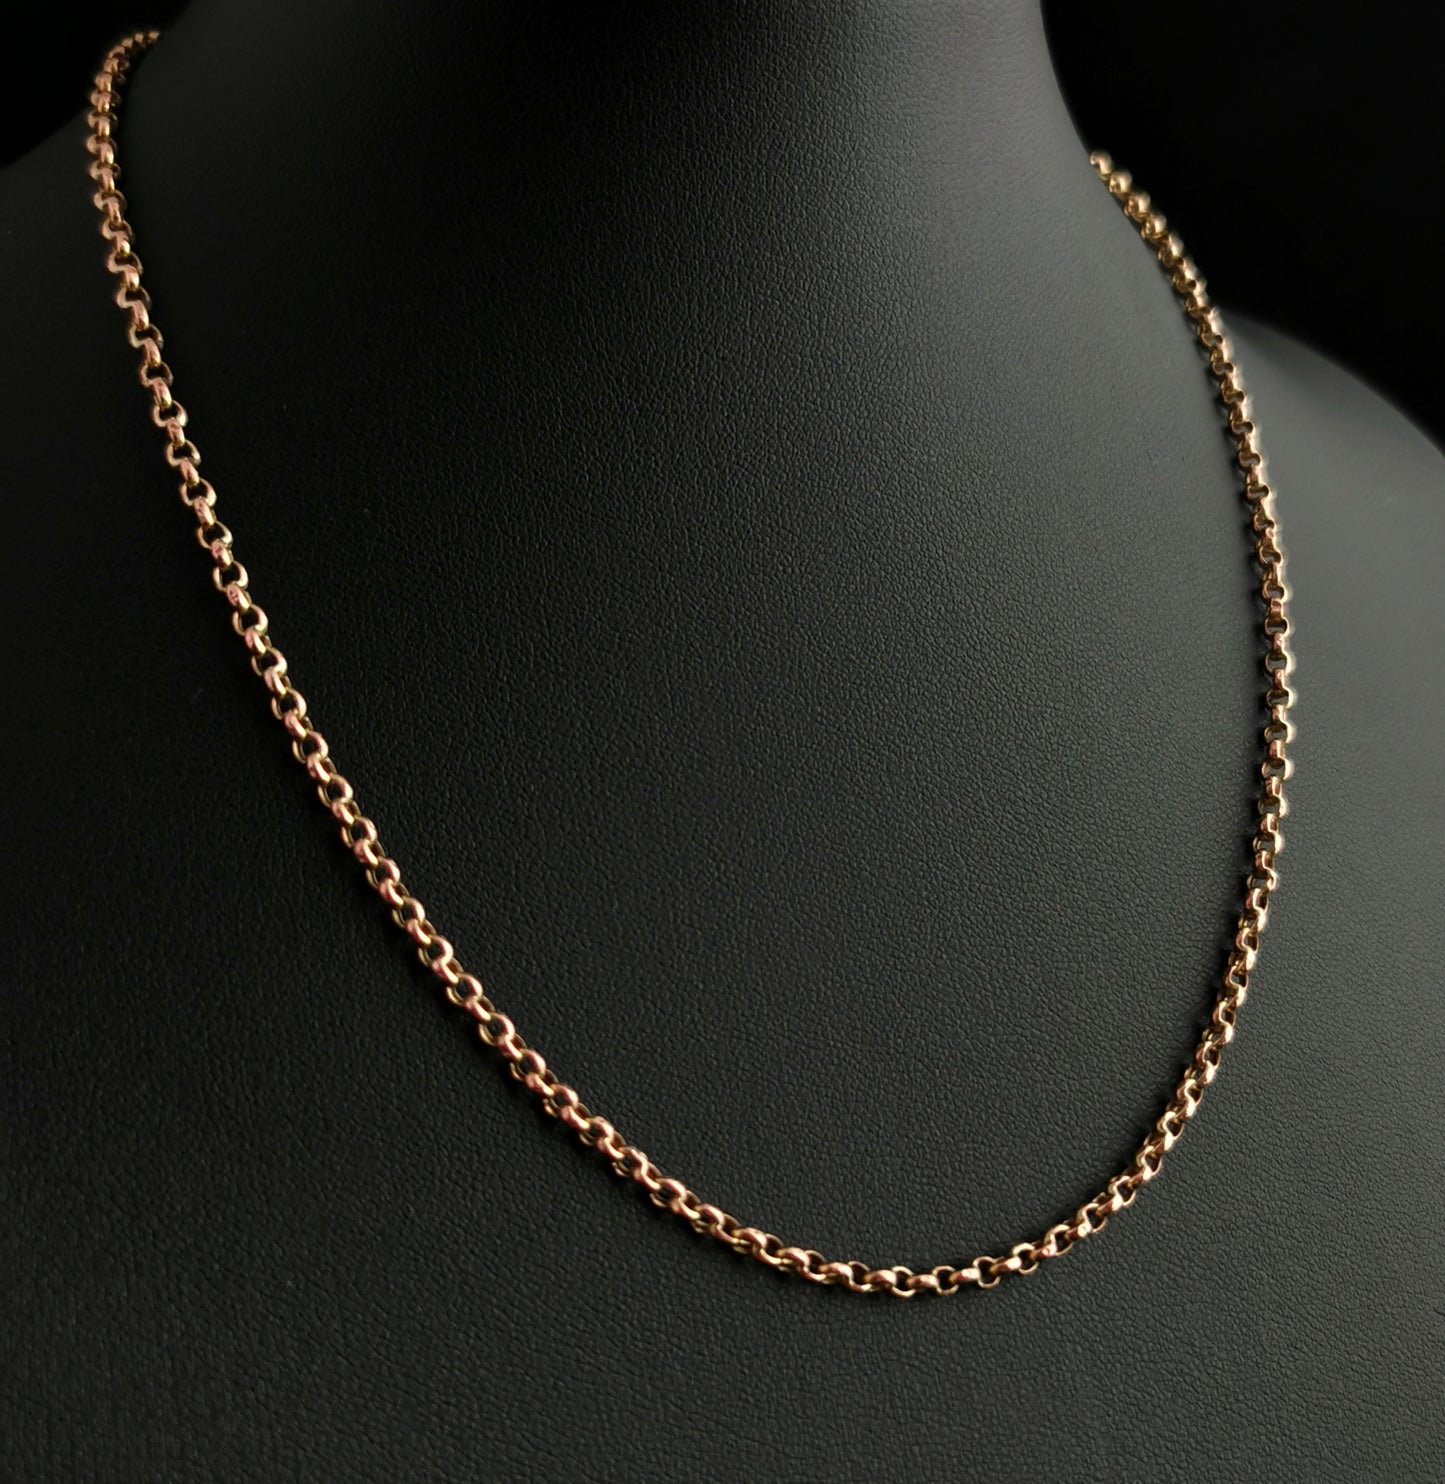 Antique 9ct gold Belcher link chain necklace, rolo link, Edwardian